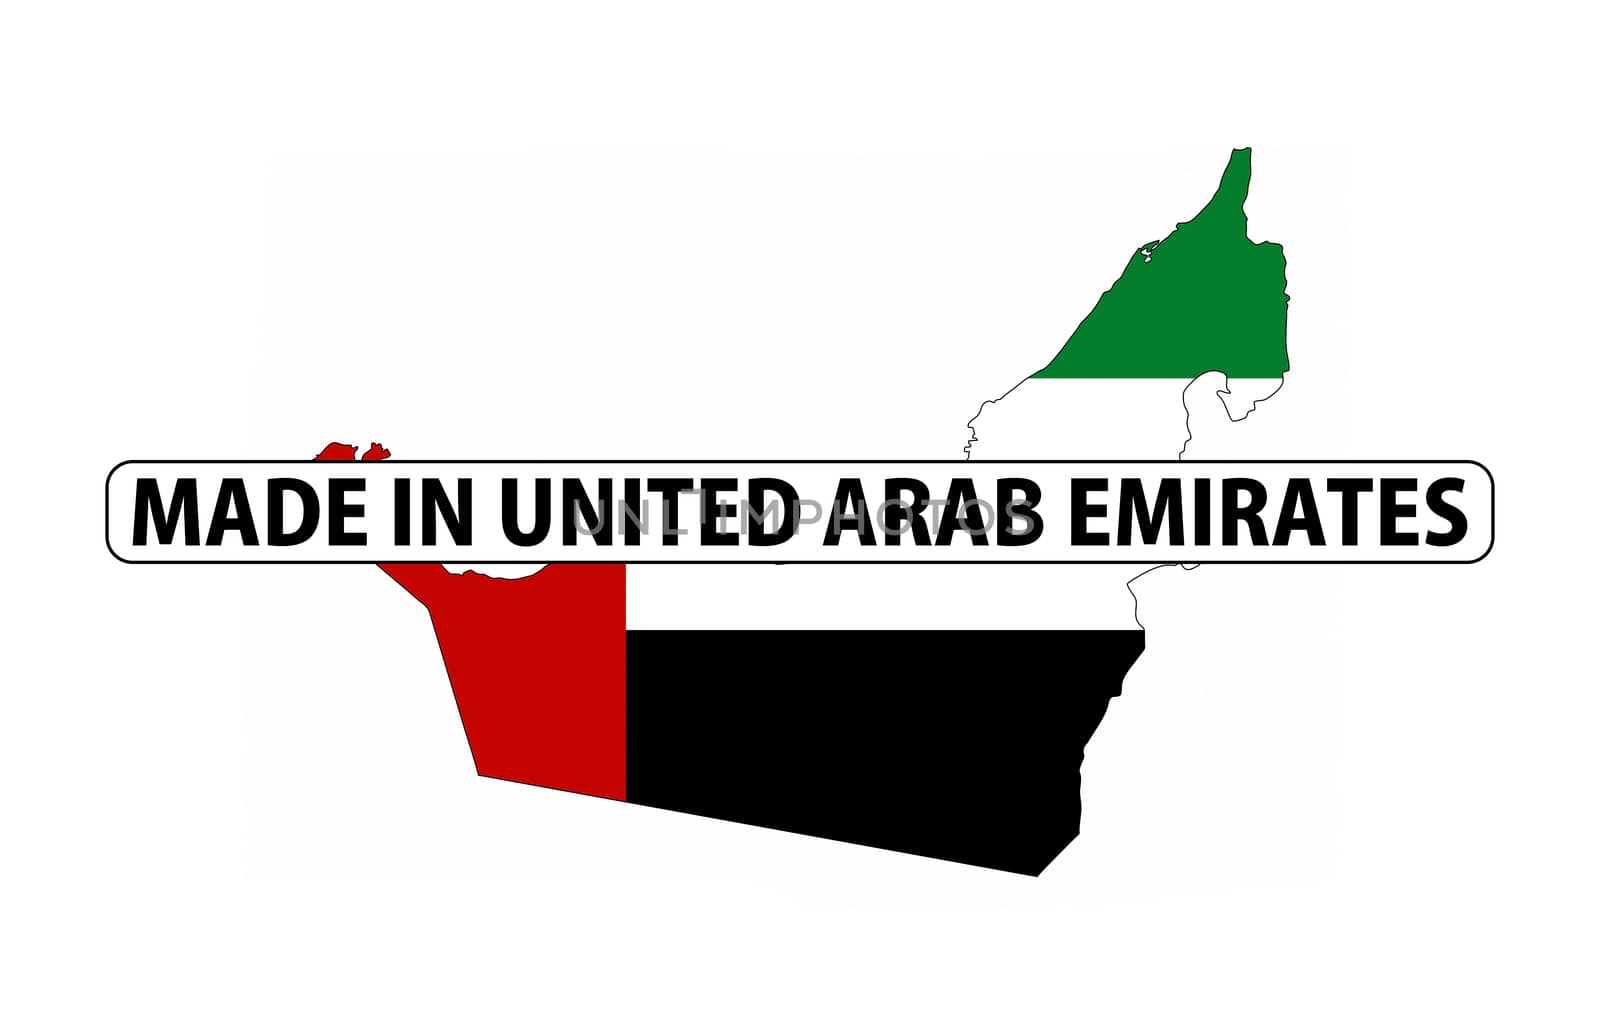 made in united arab emirates by tony4urban